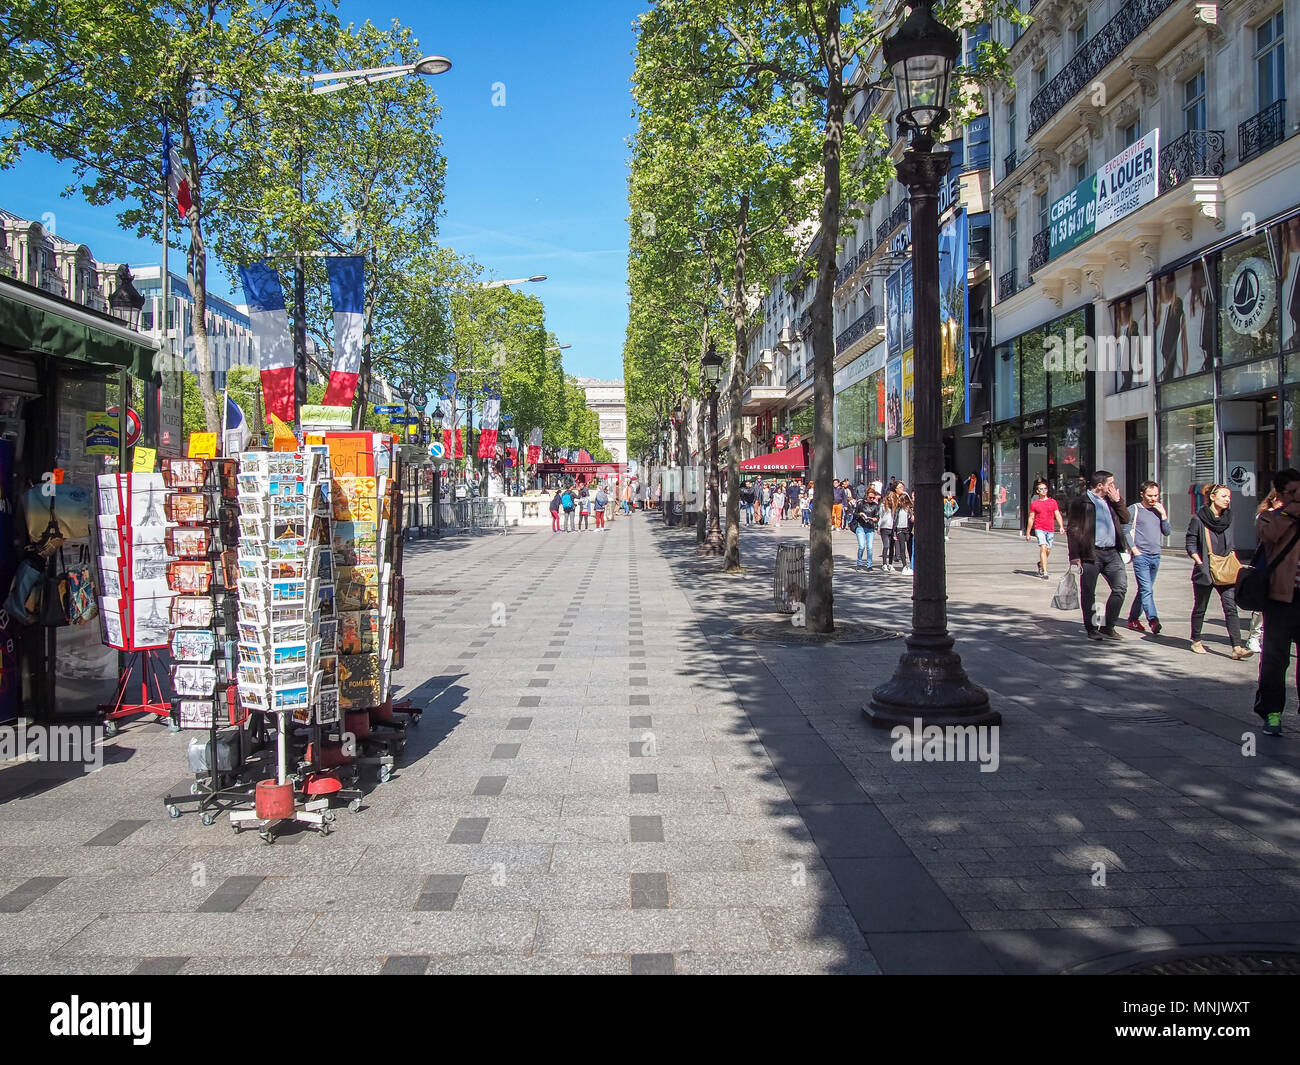 Avenue des champs elysées shopping hi-res stock photography and images -  Alamy